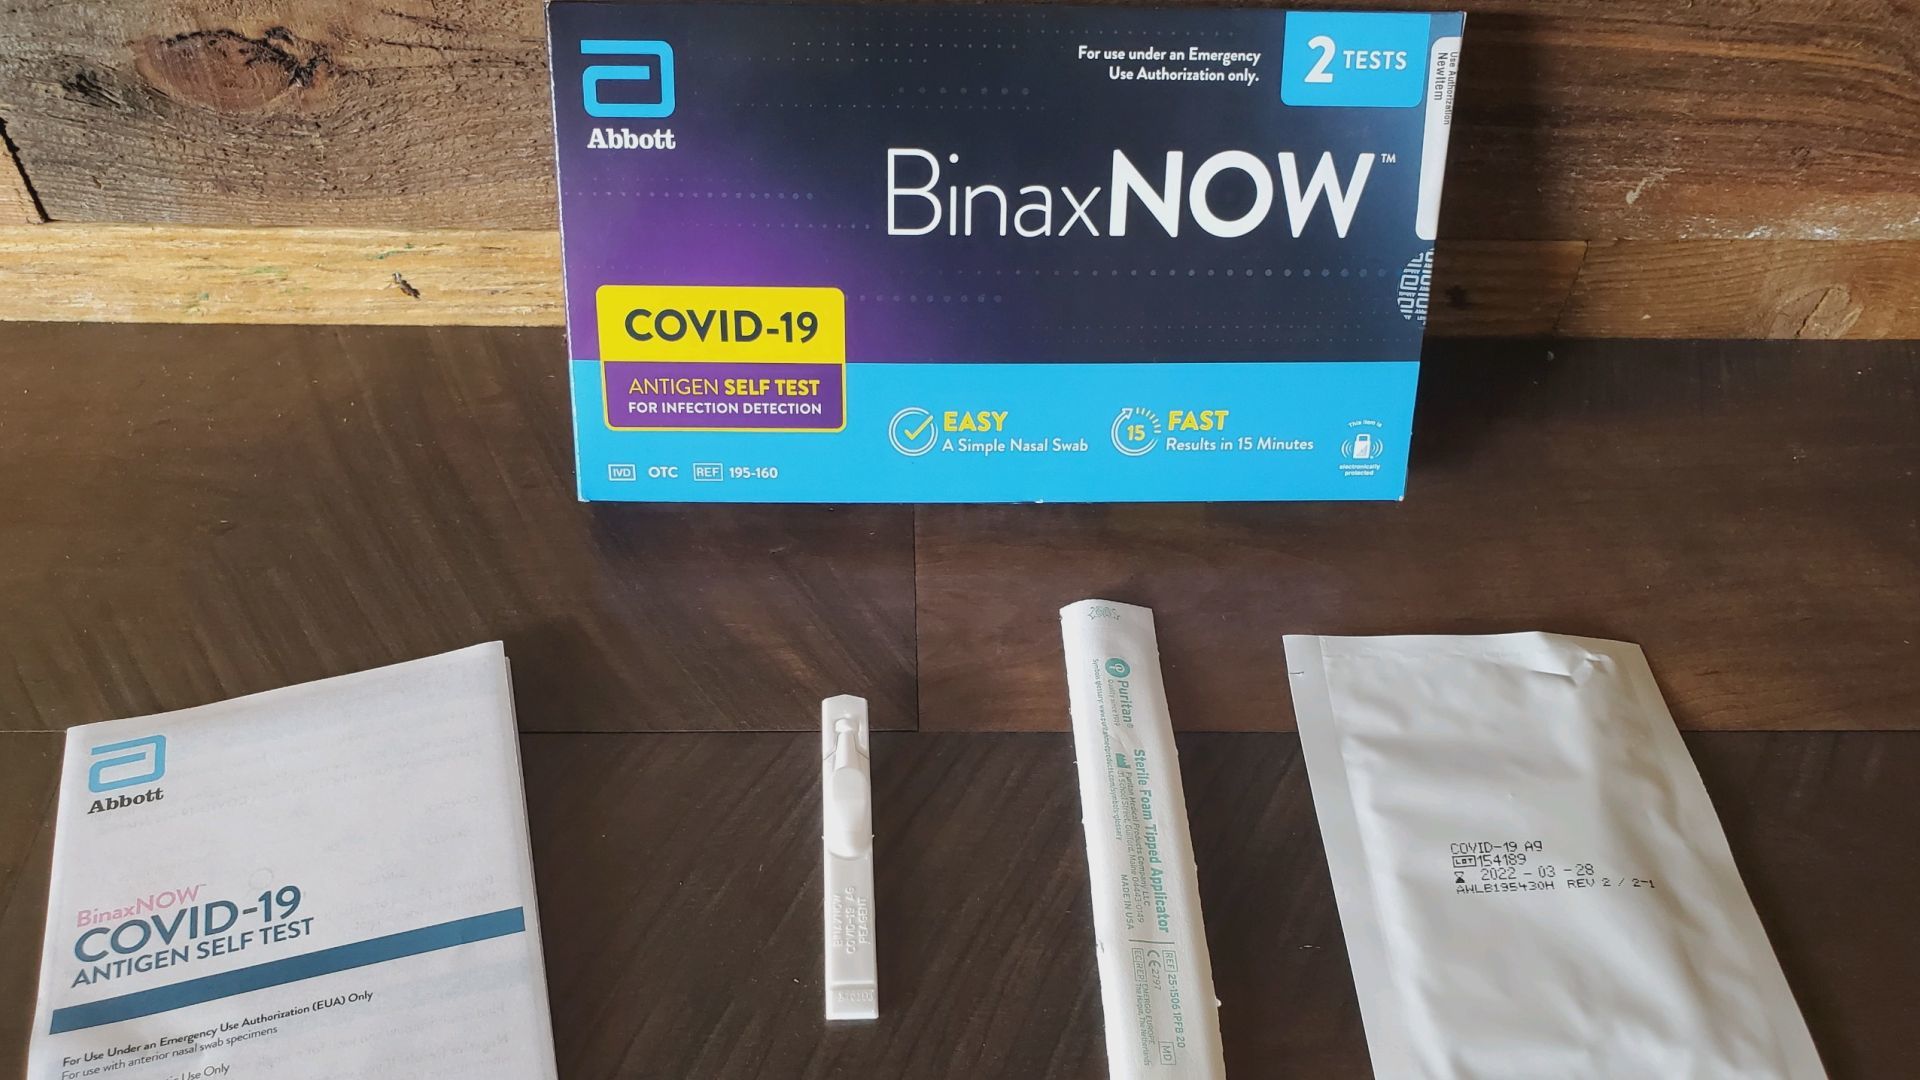 BinaxNOW COVID-19 Rapid Self-Test at Home Kit